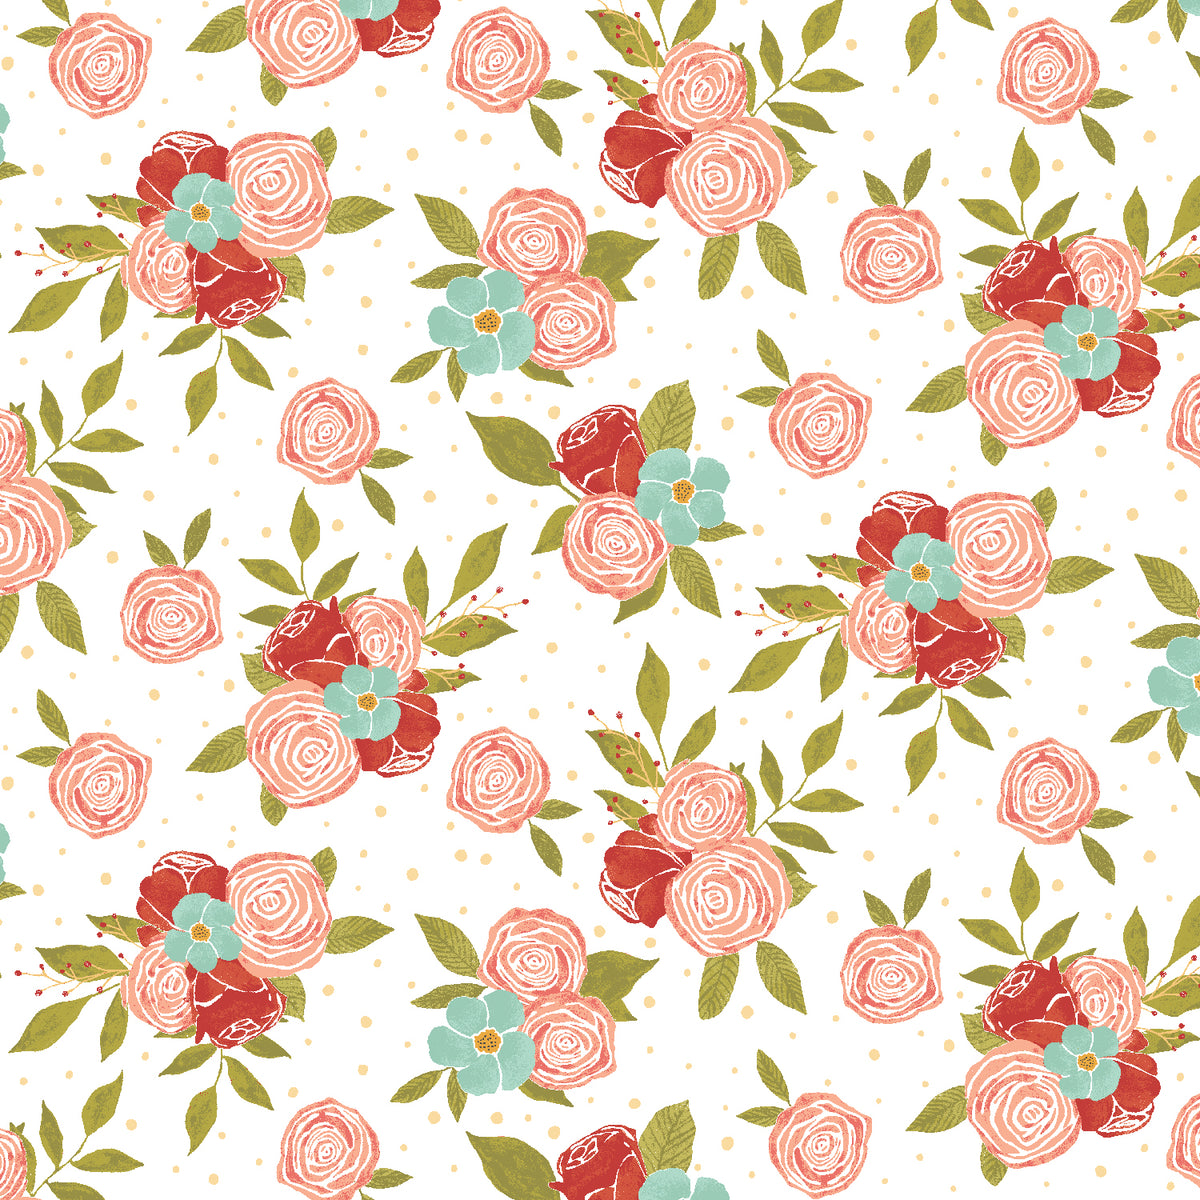 Moonlight Garden Quilt Fabric - Corsage Medium Floral in Potpourri Red/Pink - RJ5501-PO3